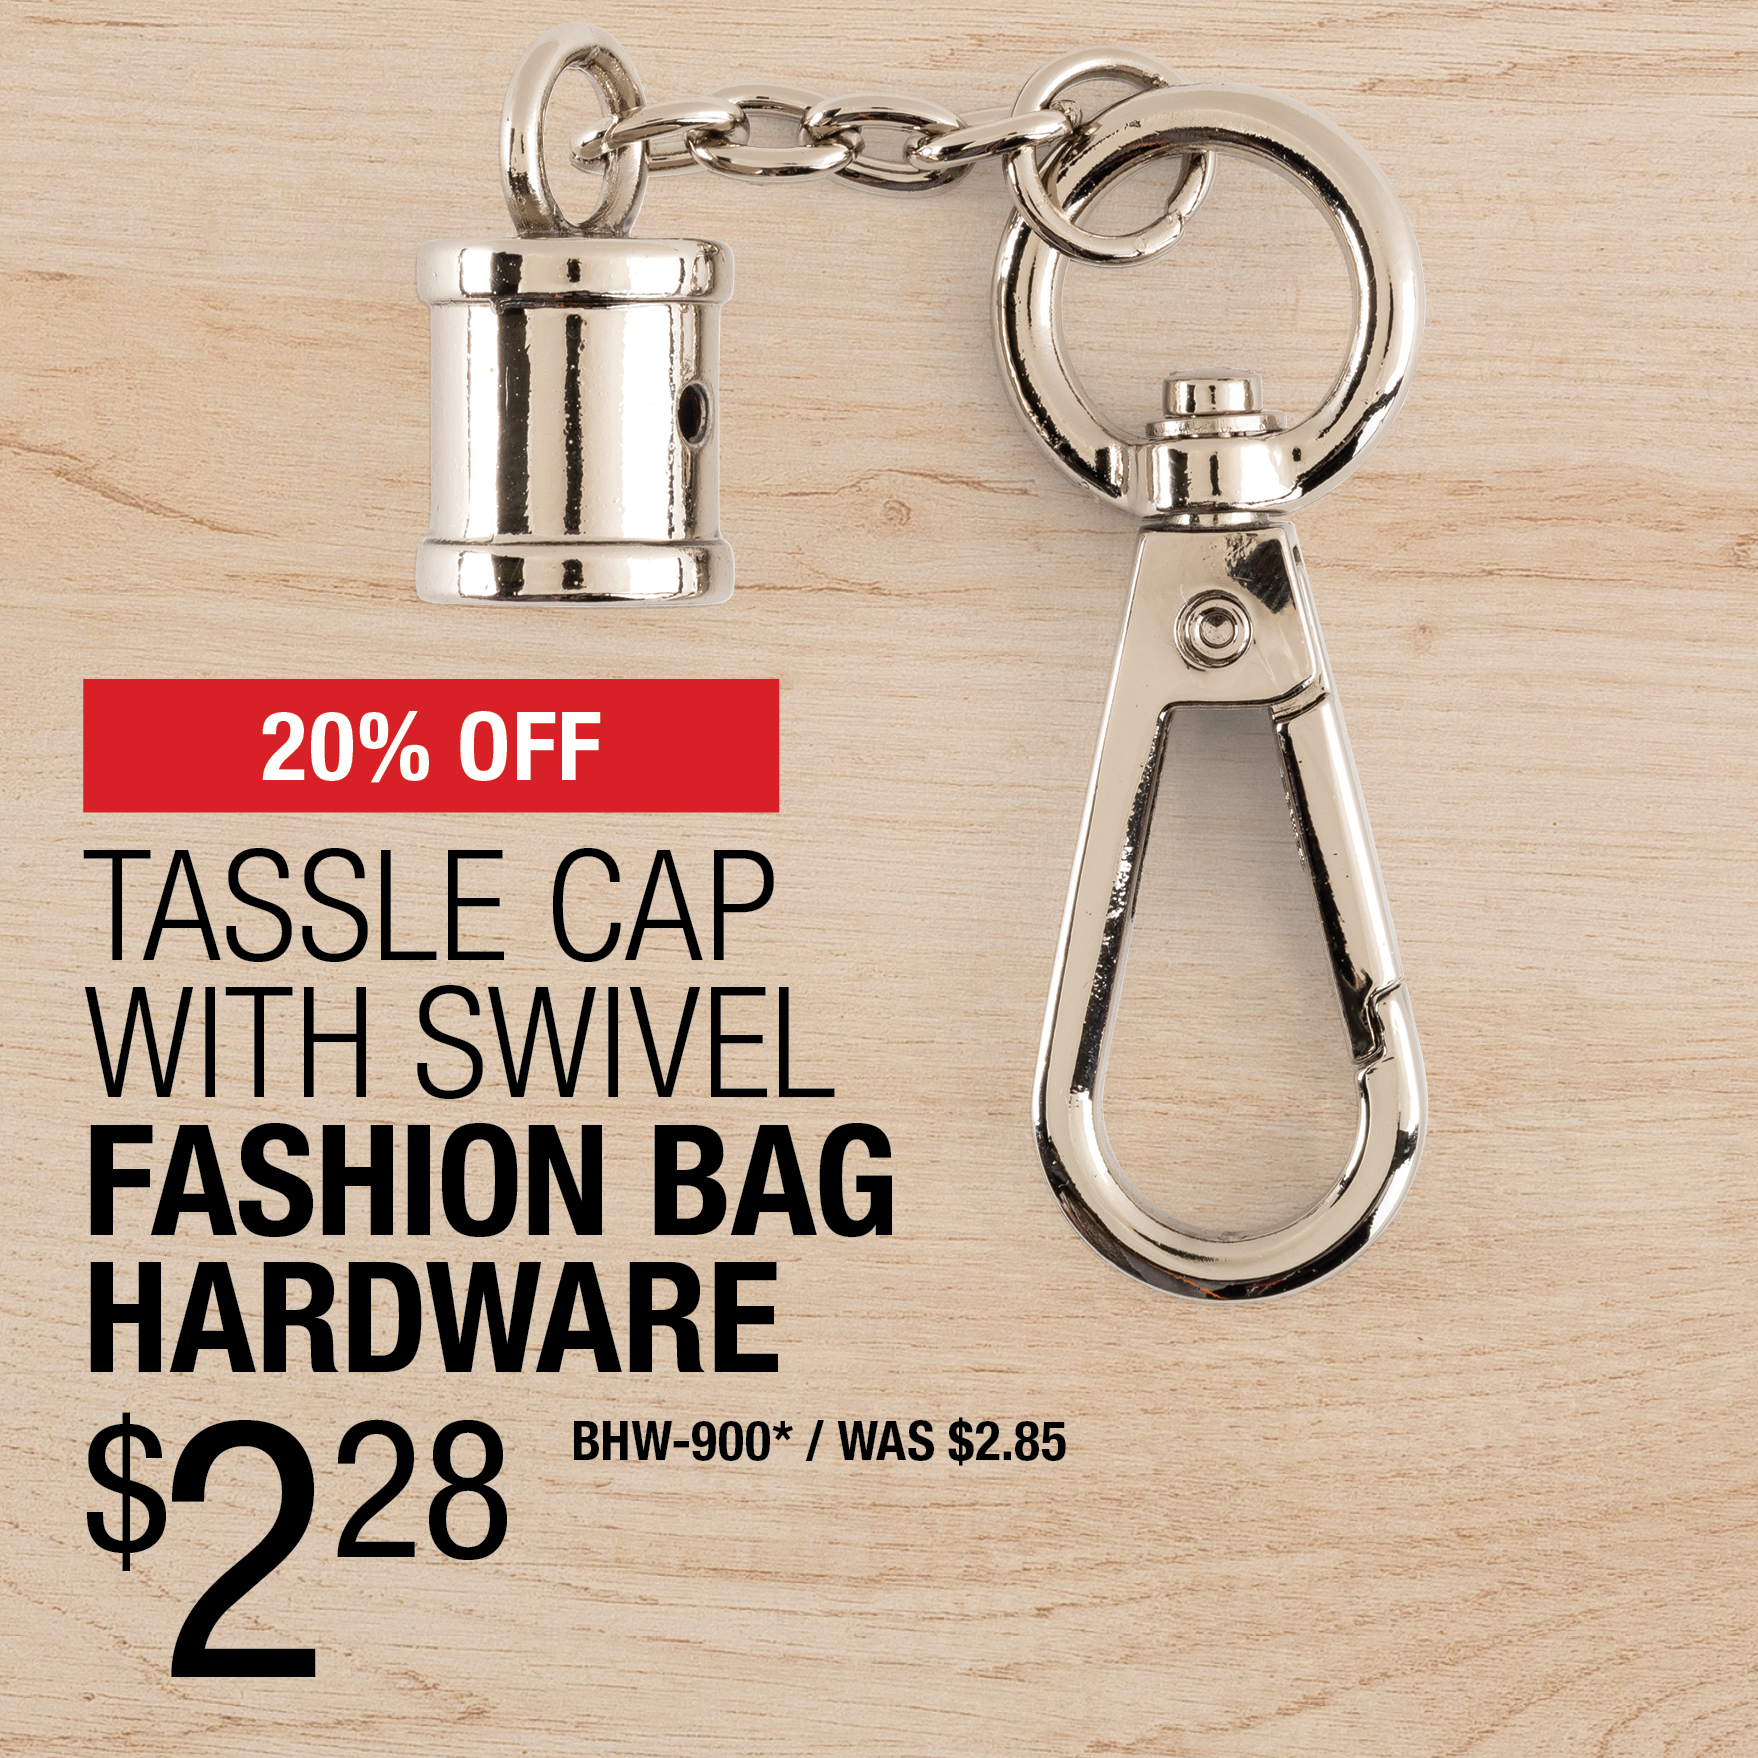 20% Off Tassle Cap With Swivel Fashion Bag Hardware $2.28 / BHW-900* / Was $2.85.